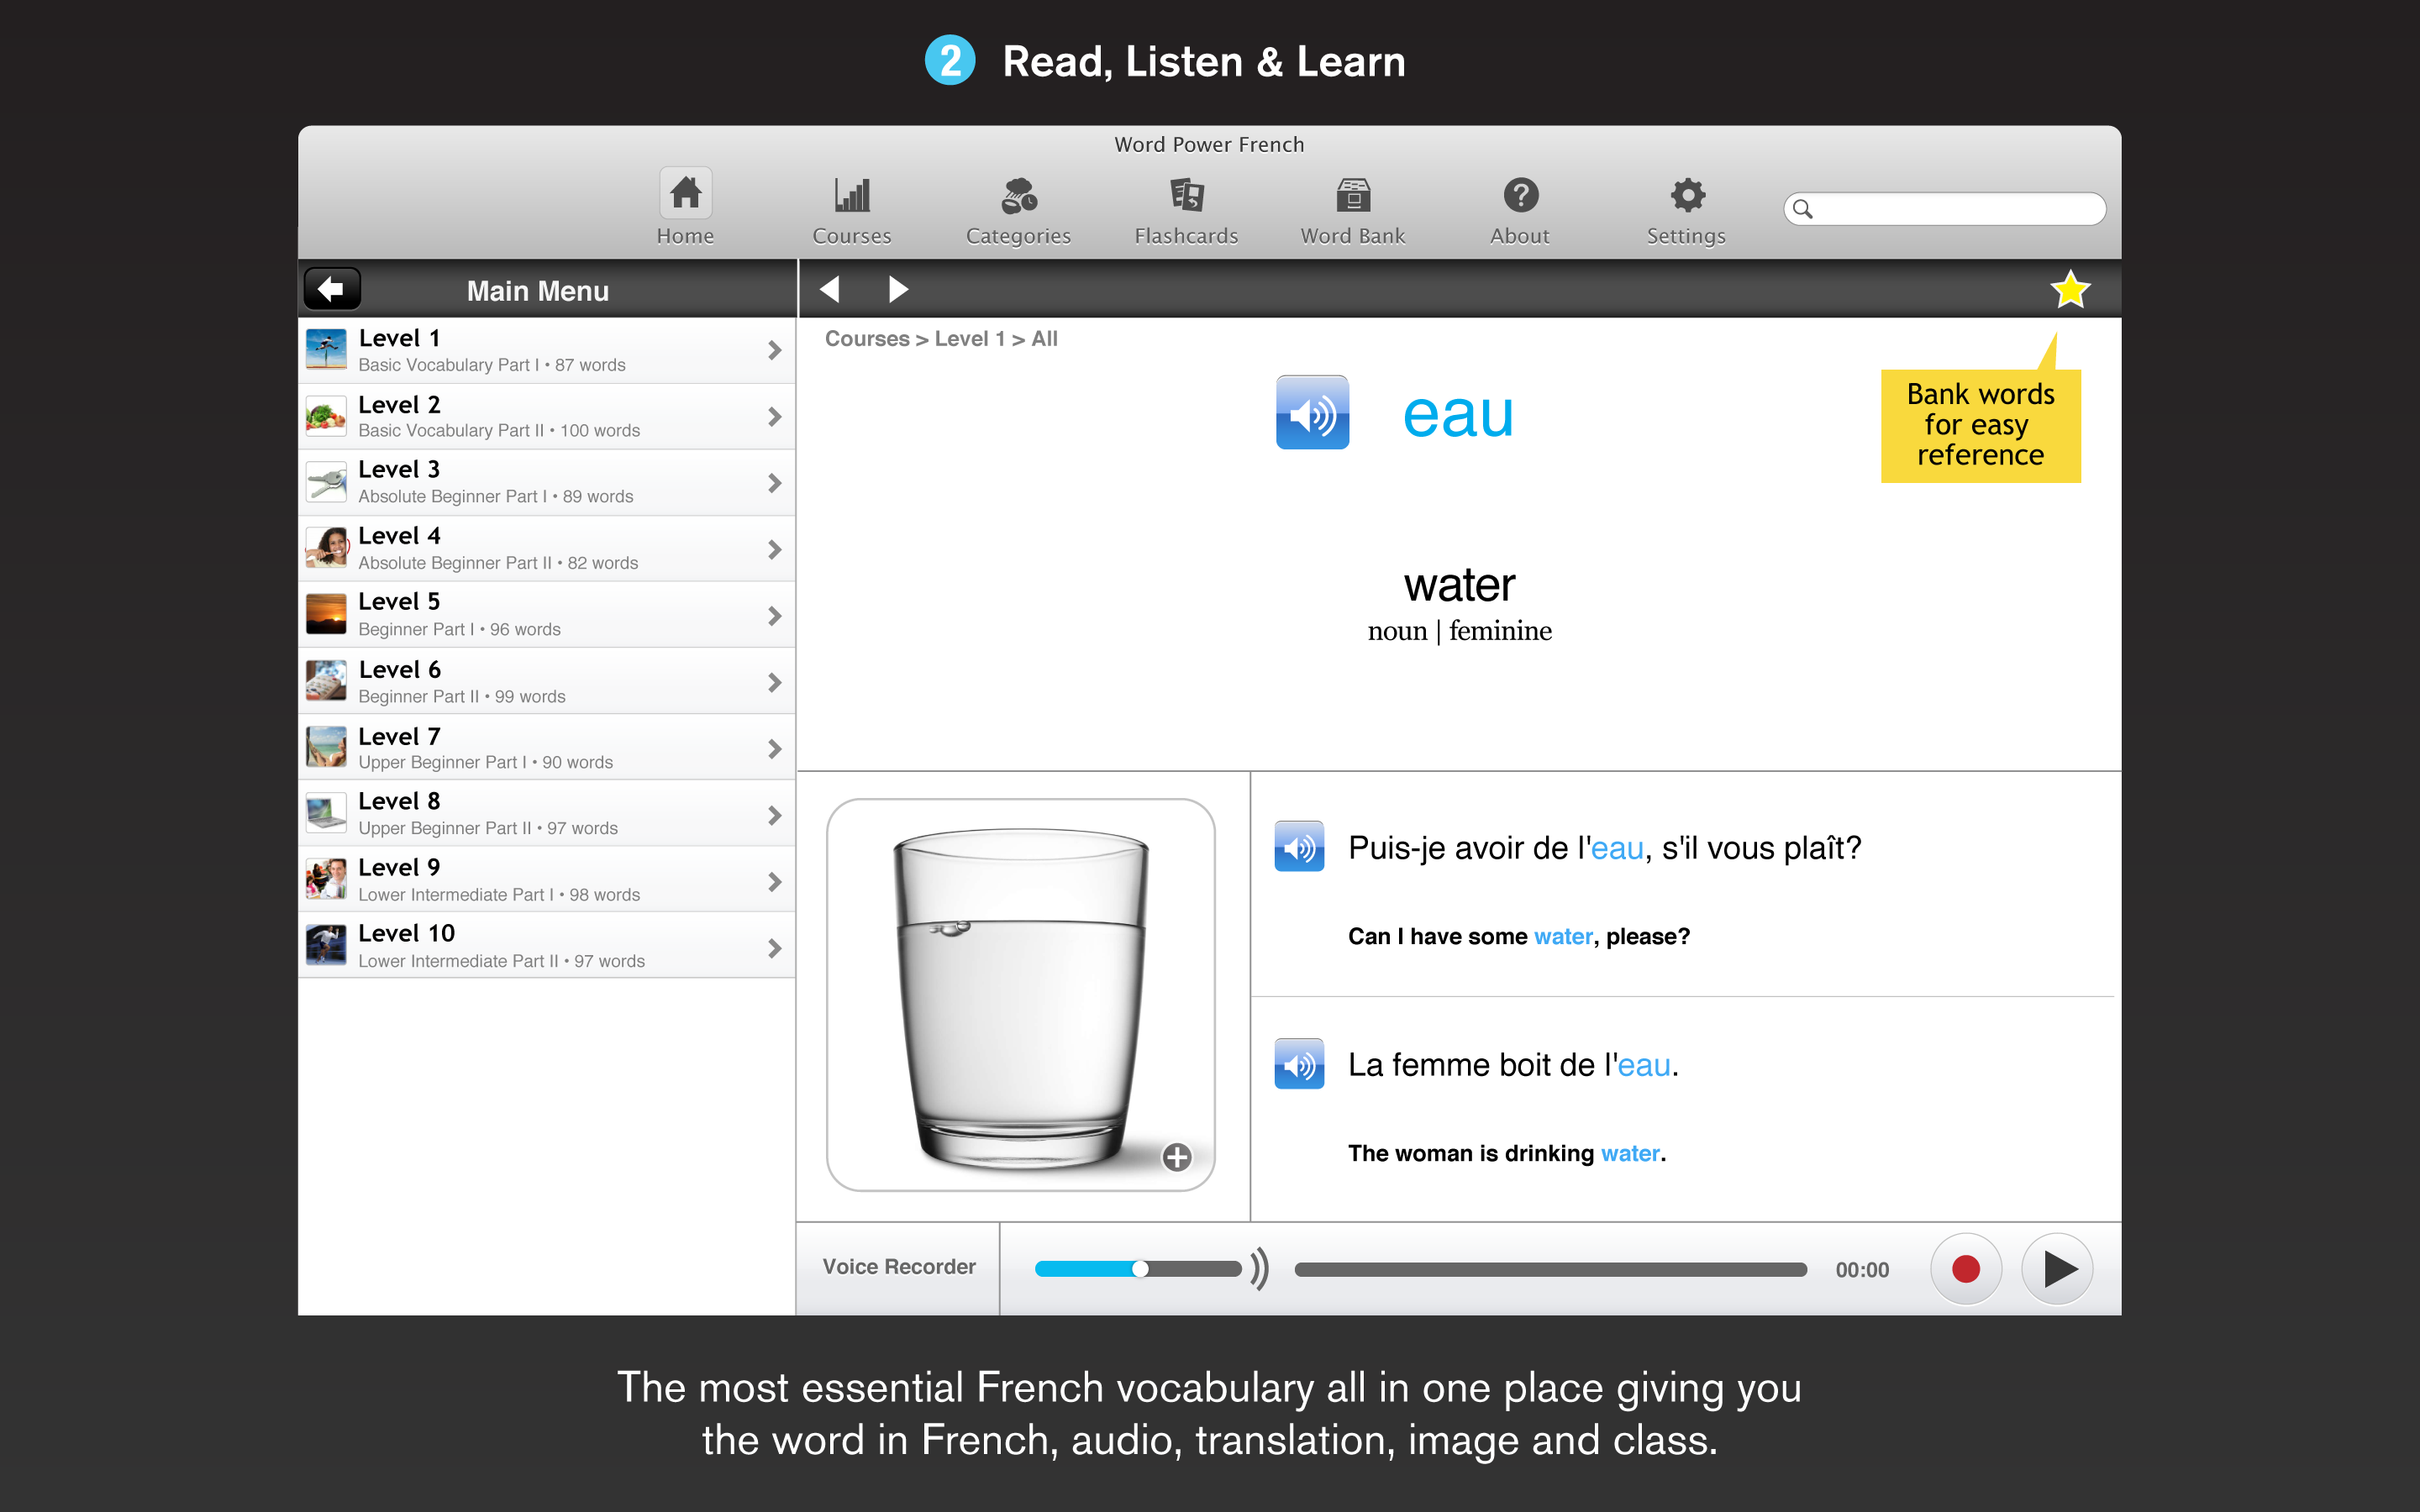 Screenshot 2 - Learn French - Gengo WordPower 